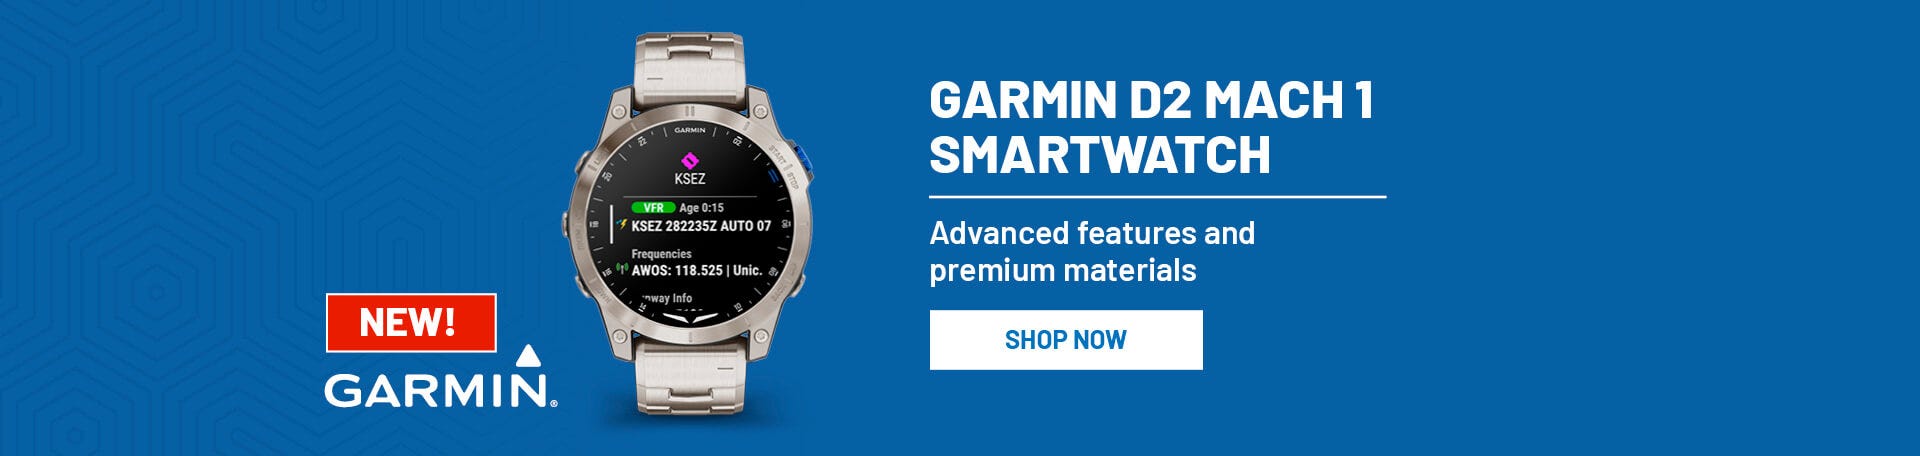 Garmin D2 Mach 1 Smartwatch